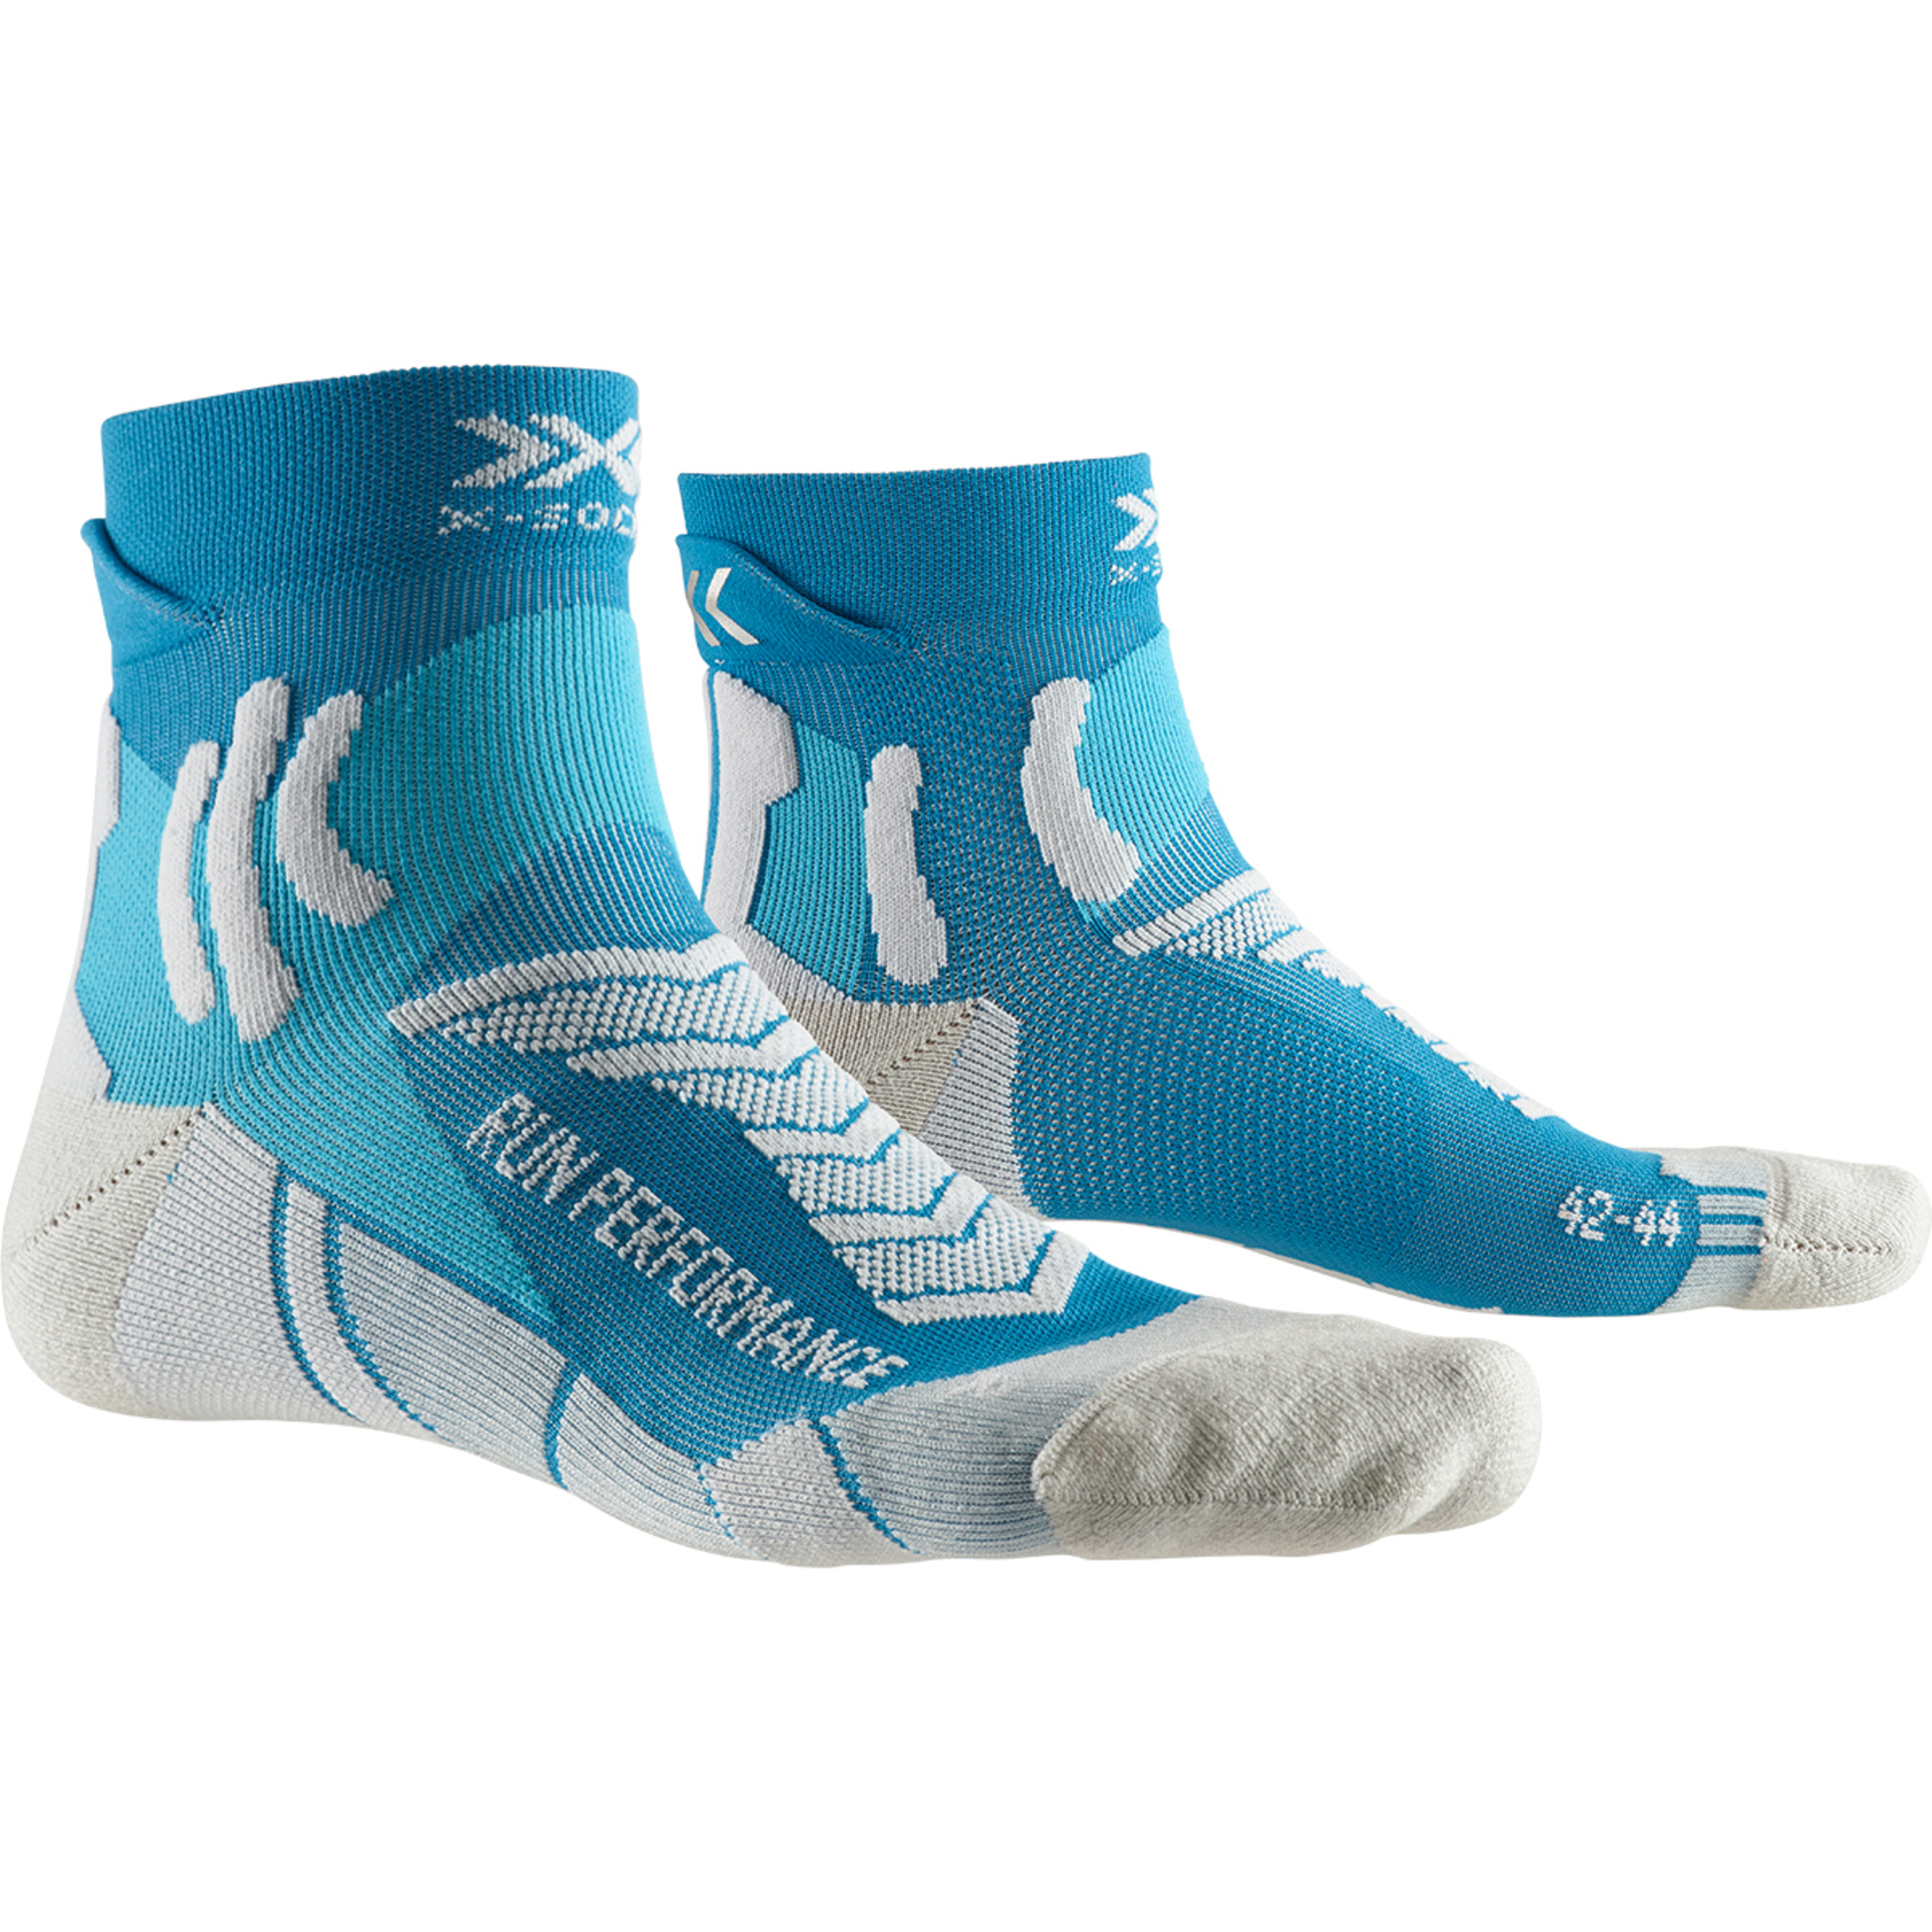 Calcetin Run Performance  X-socks - Azul  MKP